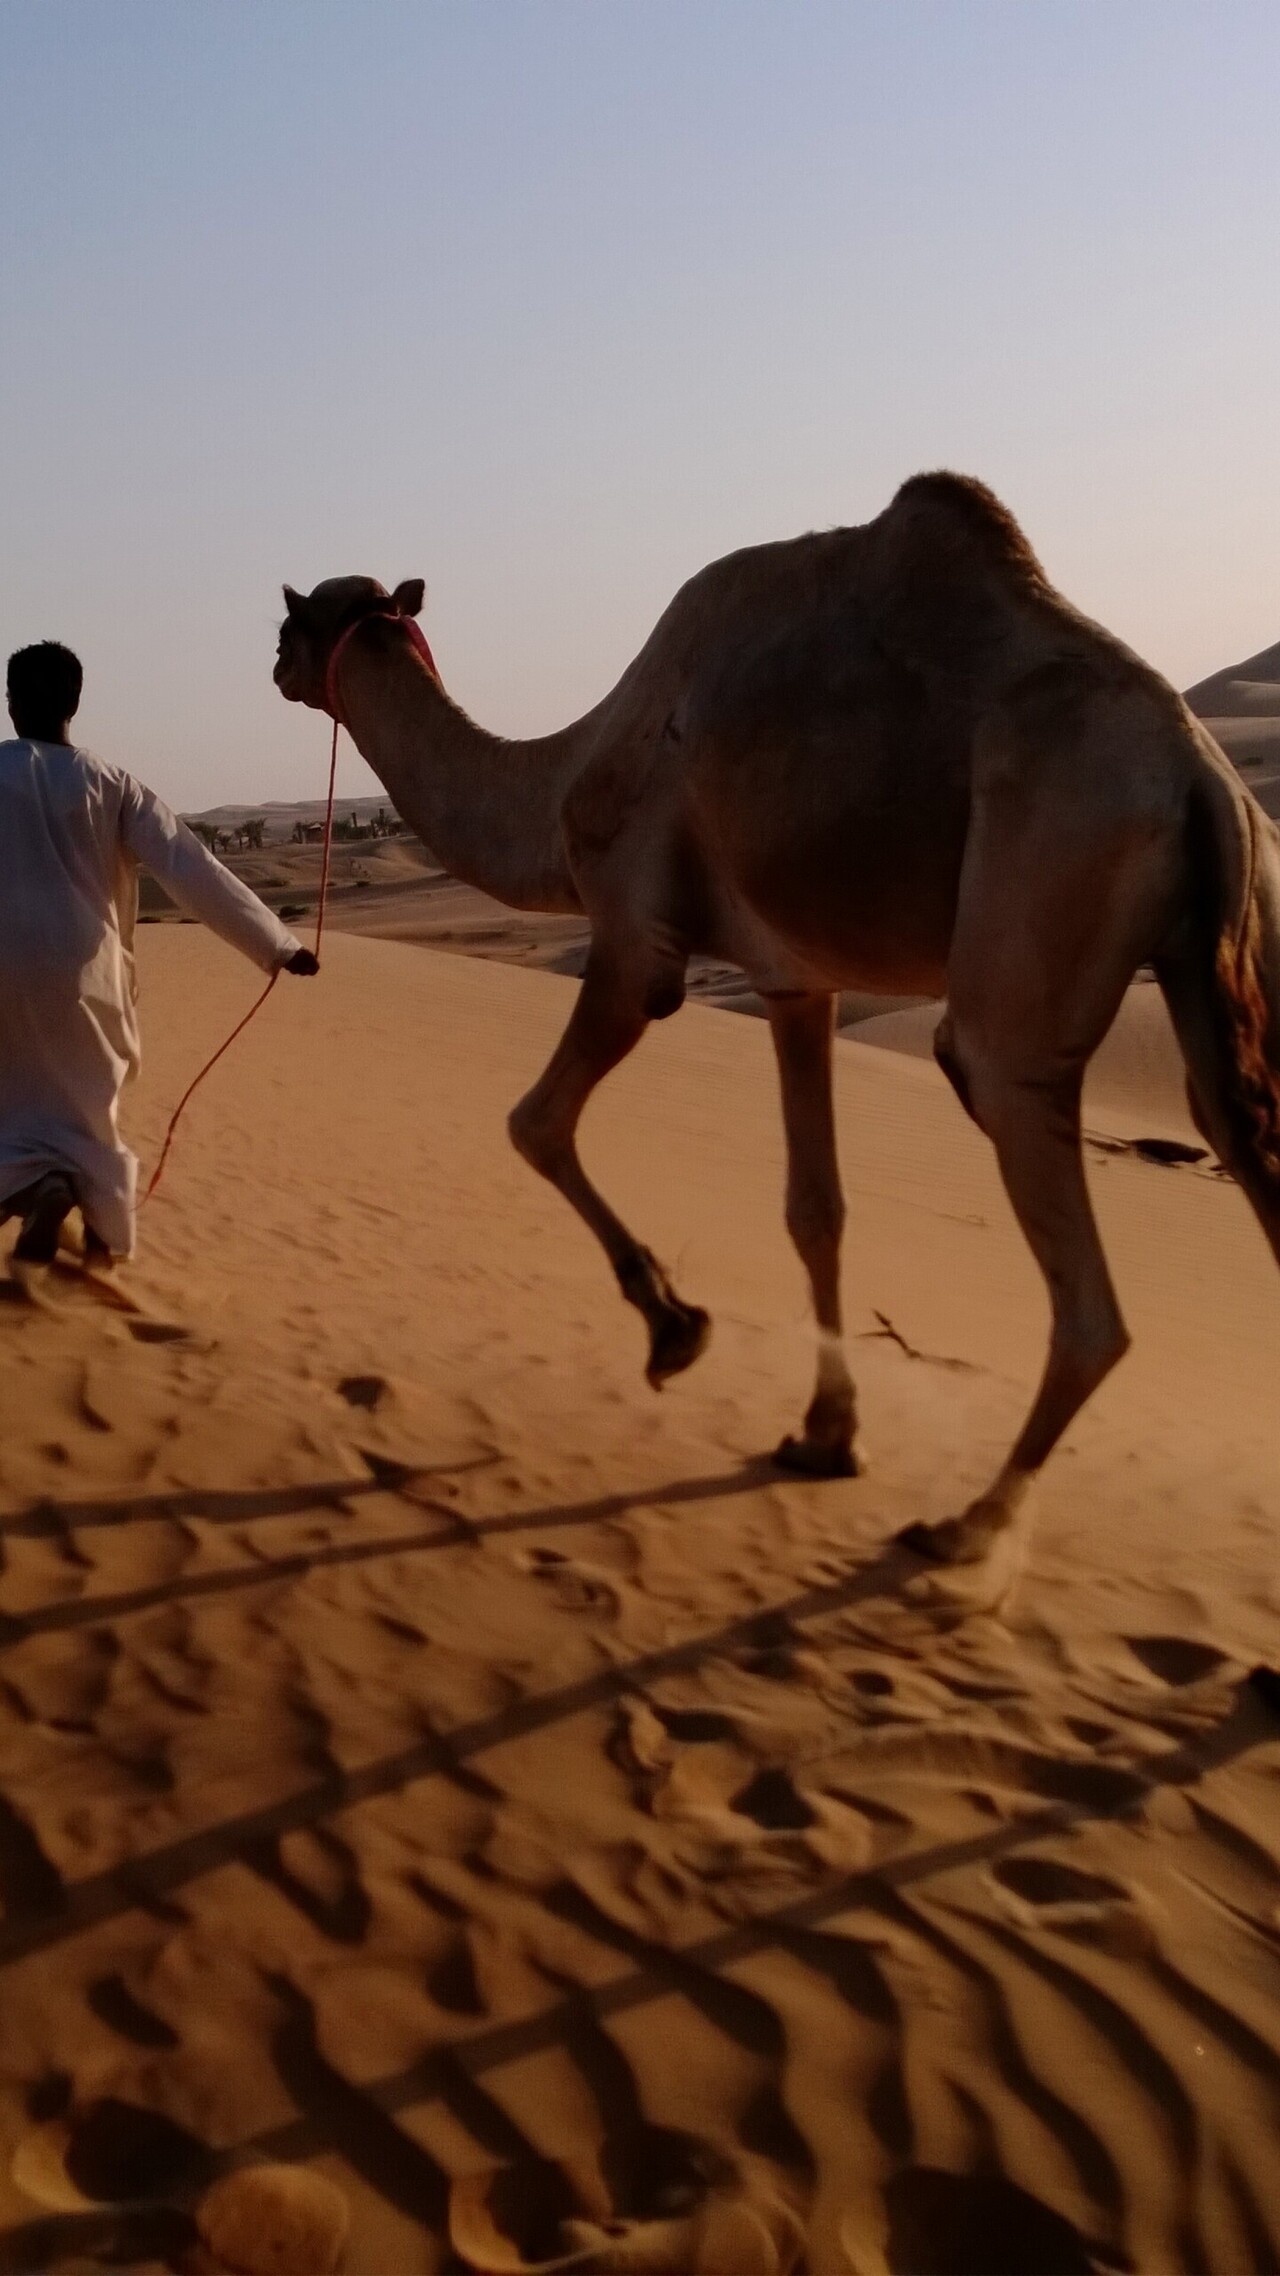 Mobile wallpaper, Desert life, Relaxing vibes, Camel appreciation, 1280x2280 HD Handy